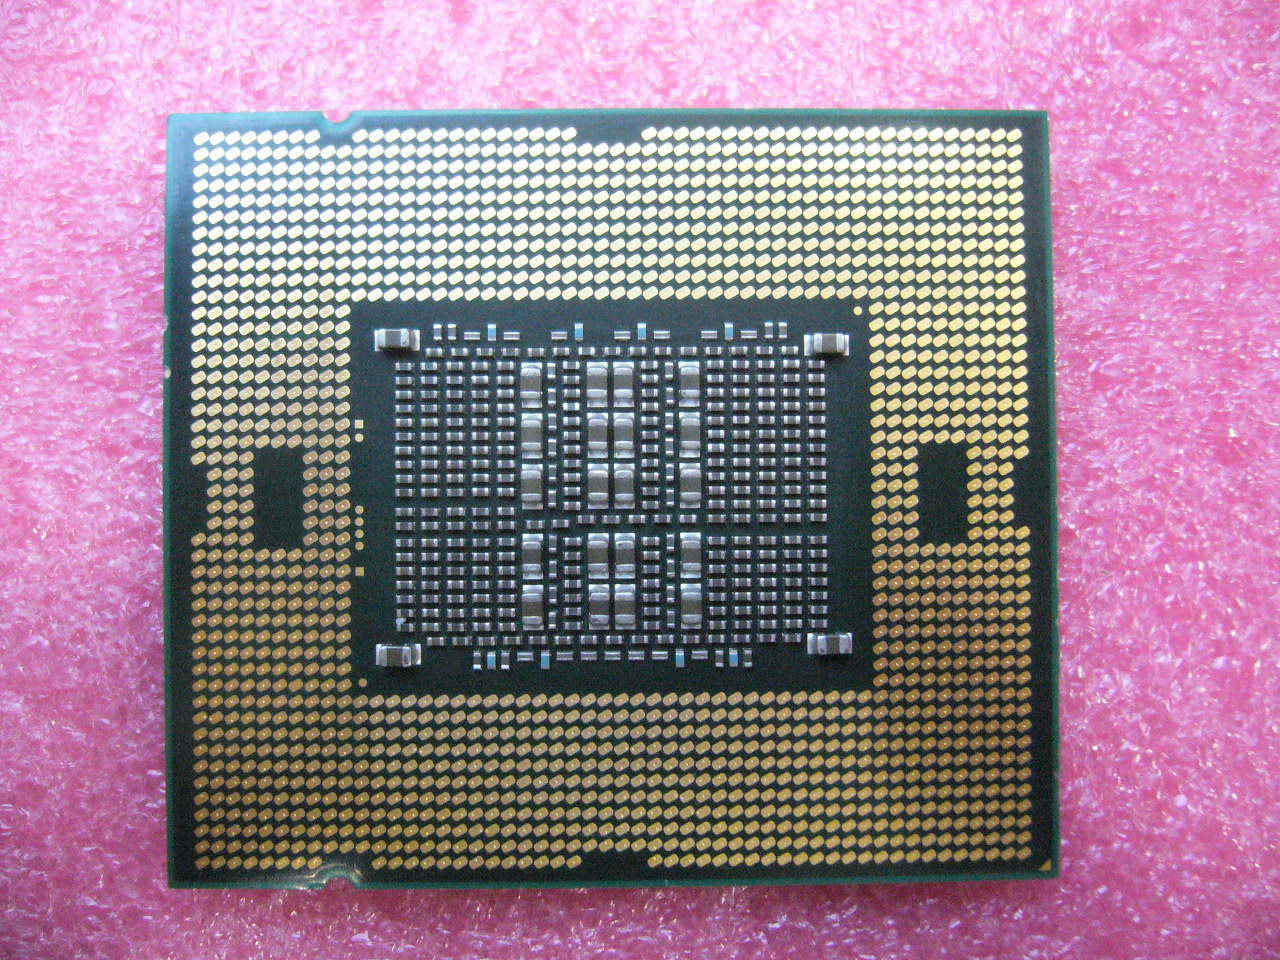 QTY 1x INTEL Six-Cores CPU E7-4807 1.86GHZ/18MB/4.80 LGA1567 SLC3L - Click Image to Close